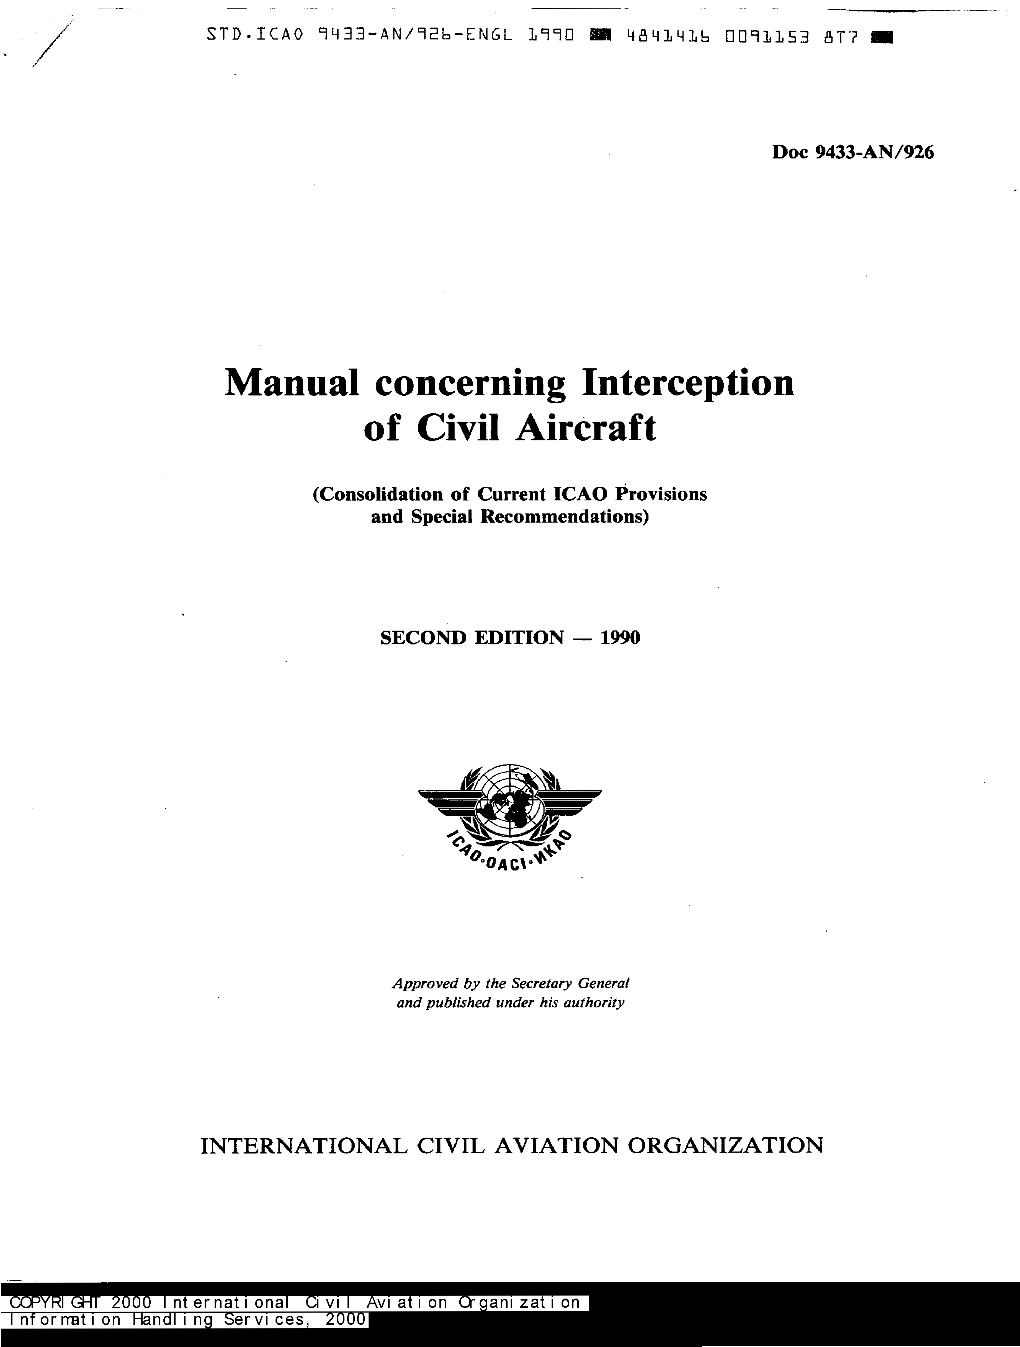 Manual Concerning Interception of Civil Aircraft